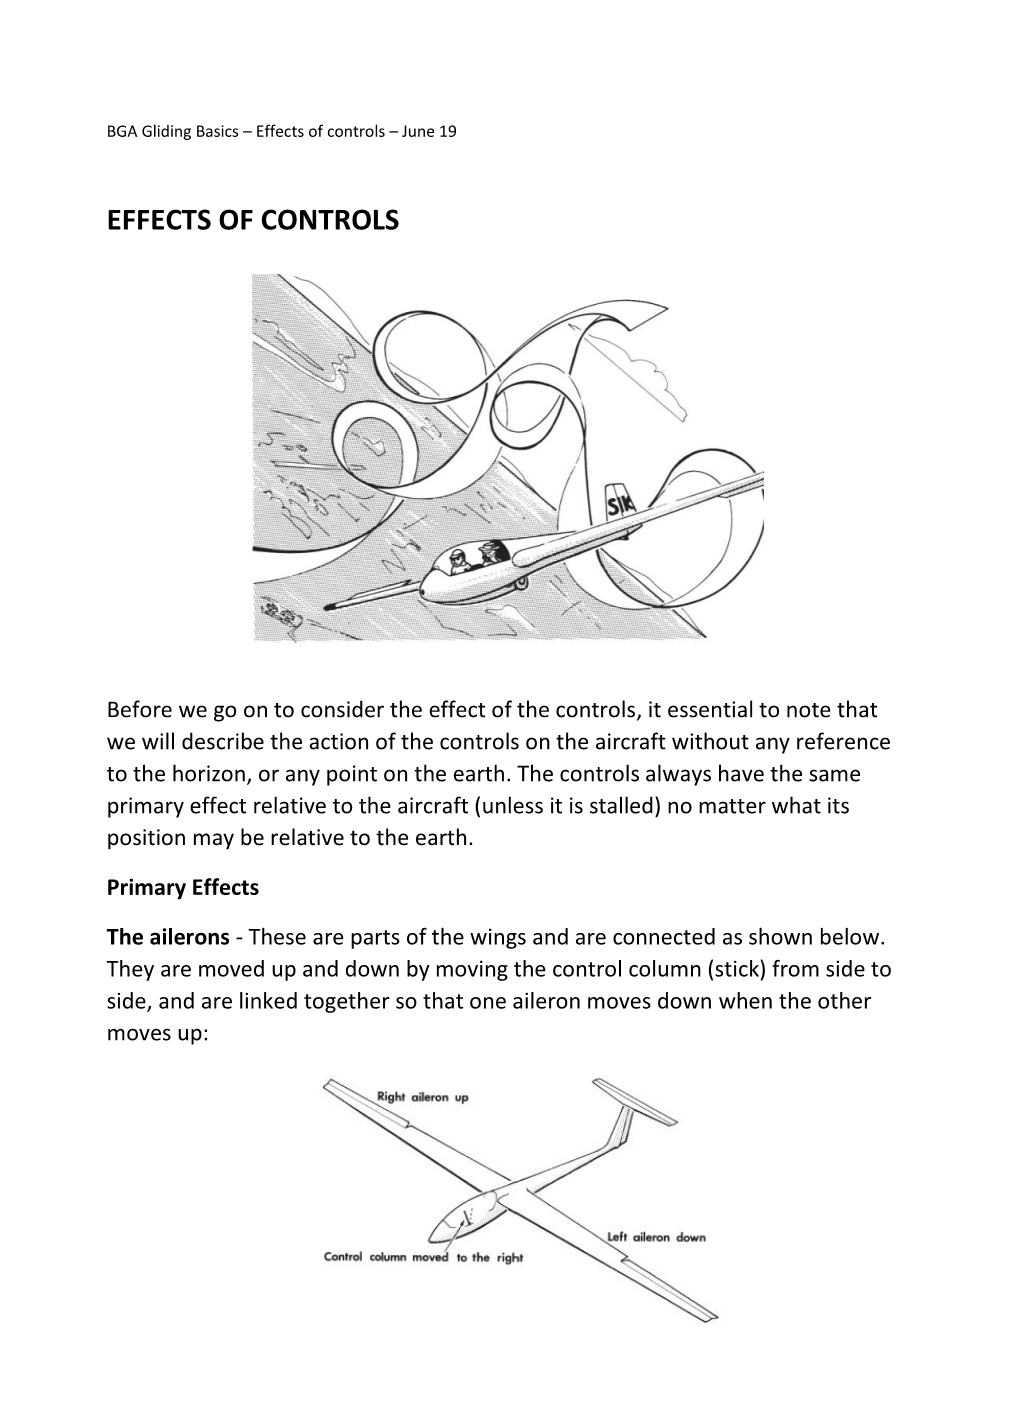 Gliding Basics – Effects of Controls – June 19